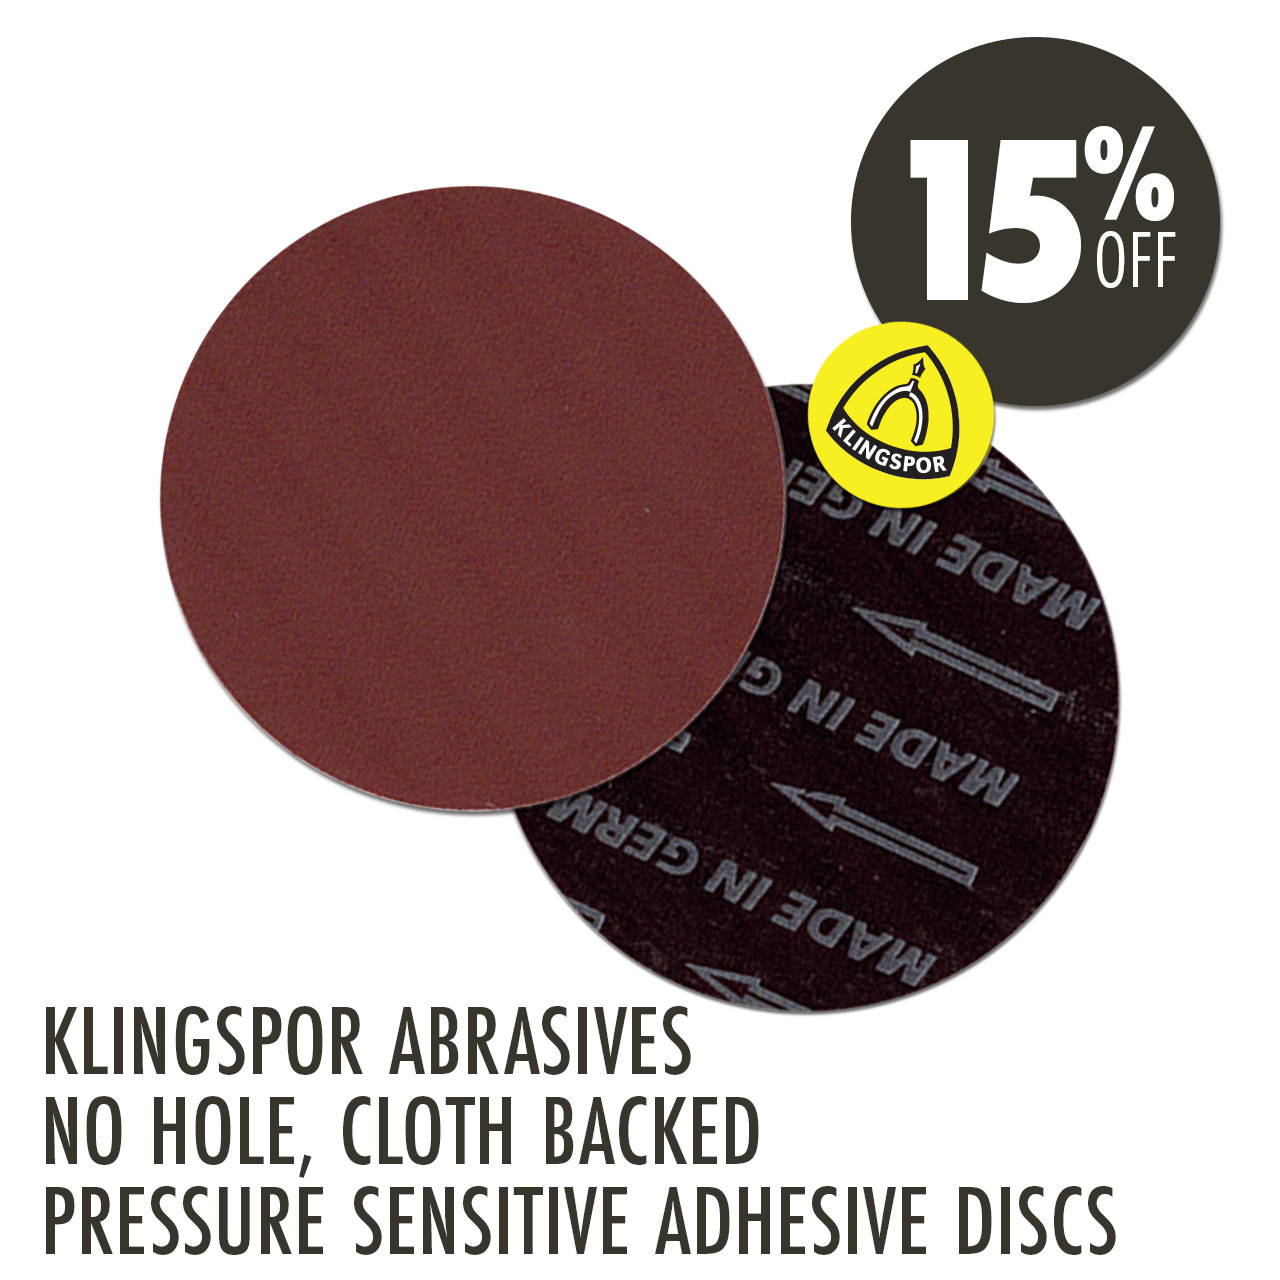 15% Off Klingspor Abrasives, No Hole, Cloth Backed Pressure Sensitive Adhesive Discs